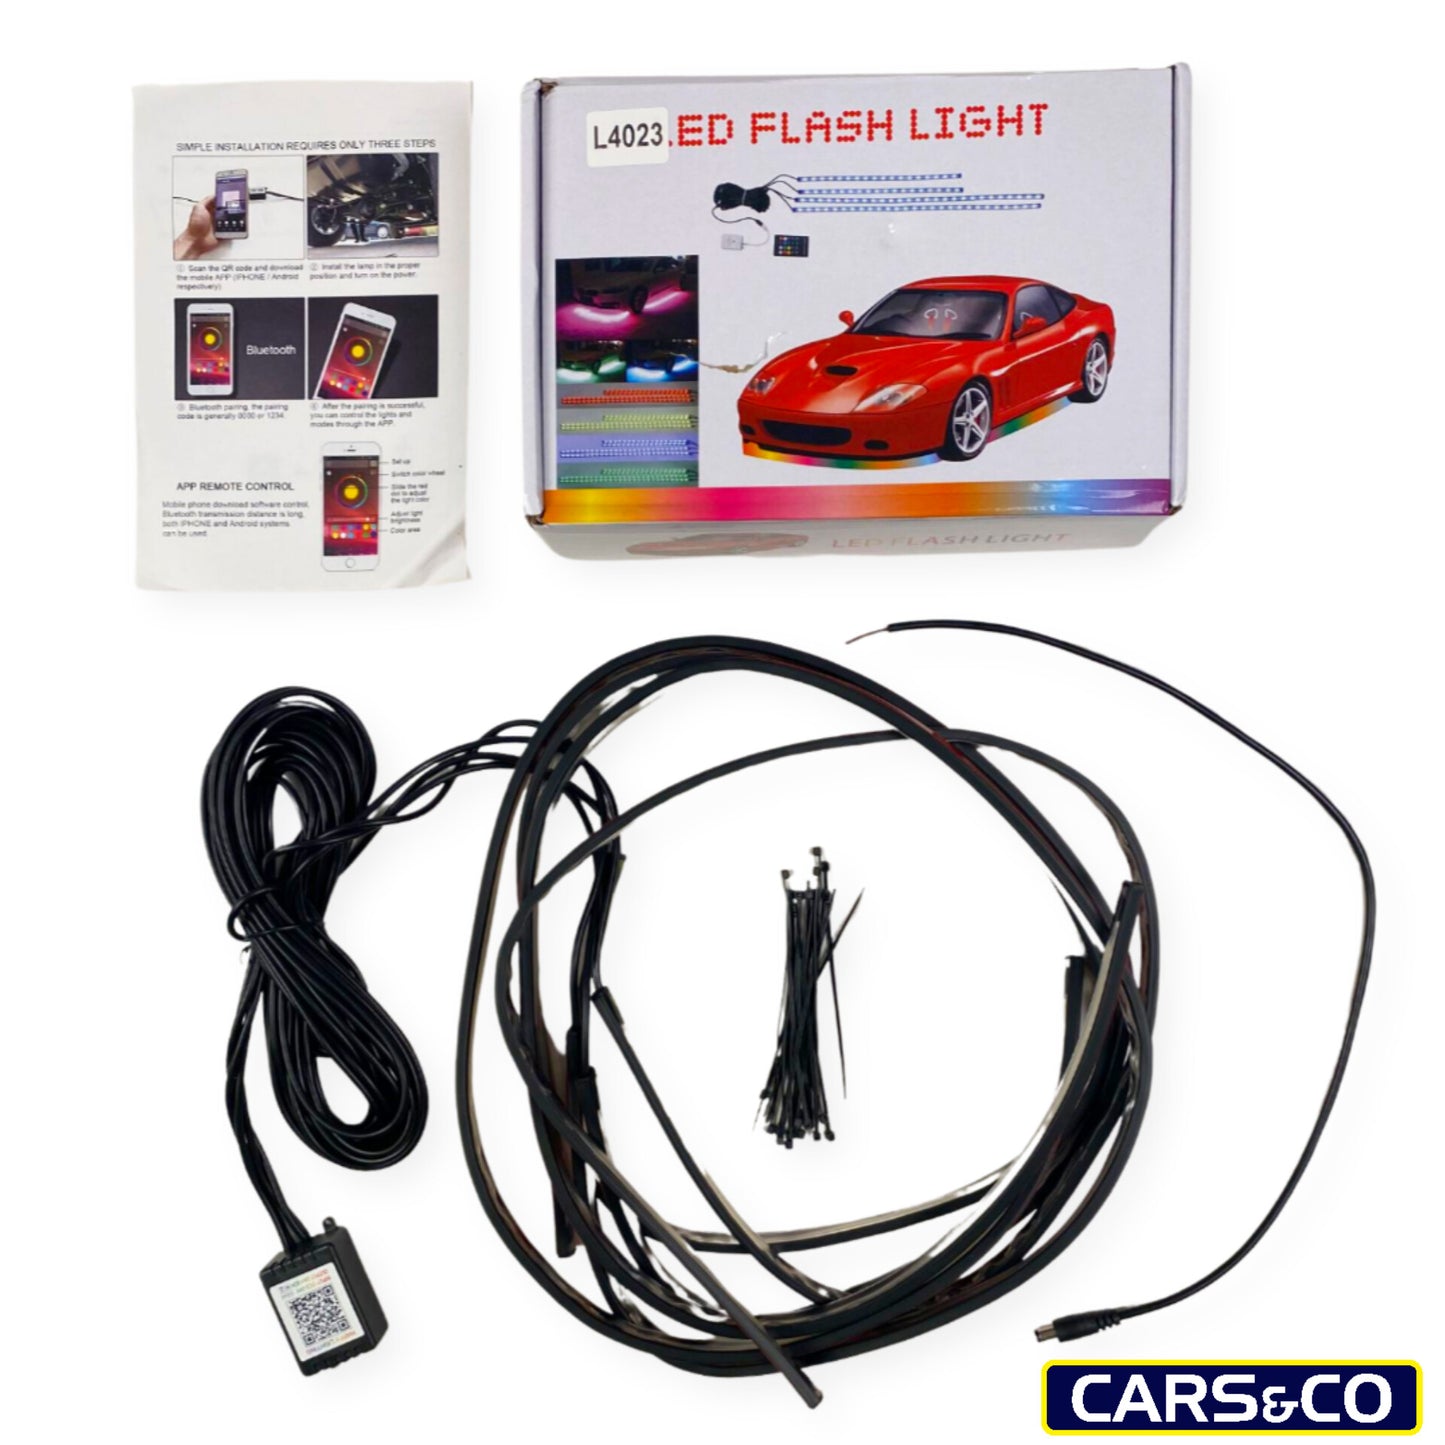 Car Underglow Light Flexible Strip LED Underbody Lights Remote APP Control Car Led Neon Light RGB Decorative Atmosphere Lamp